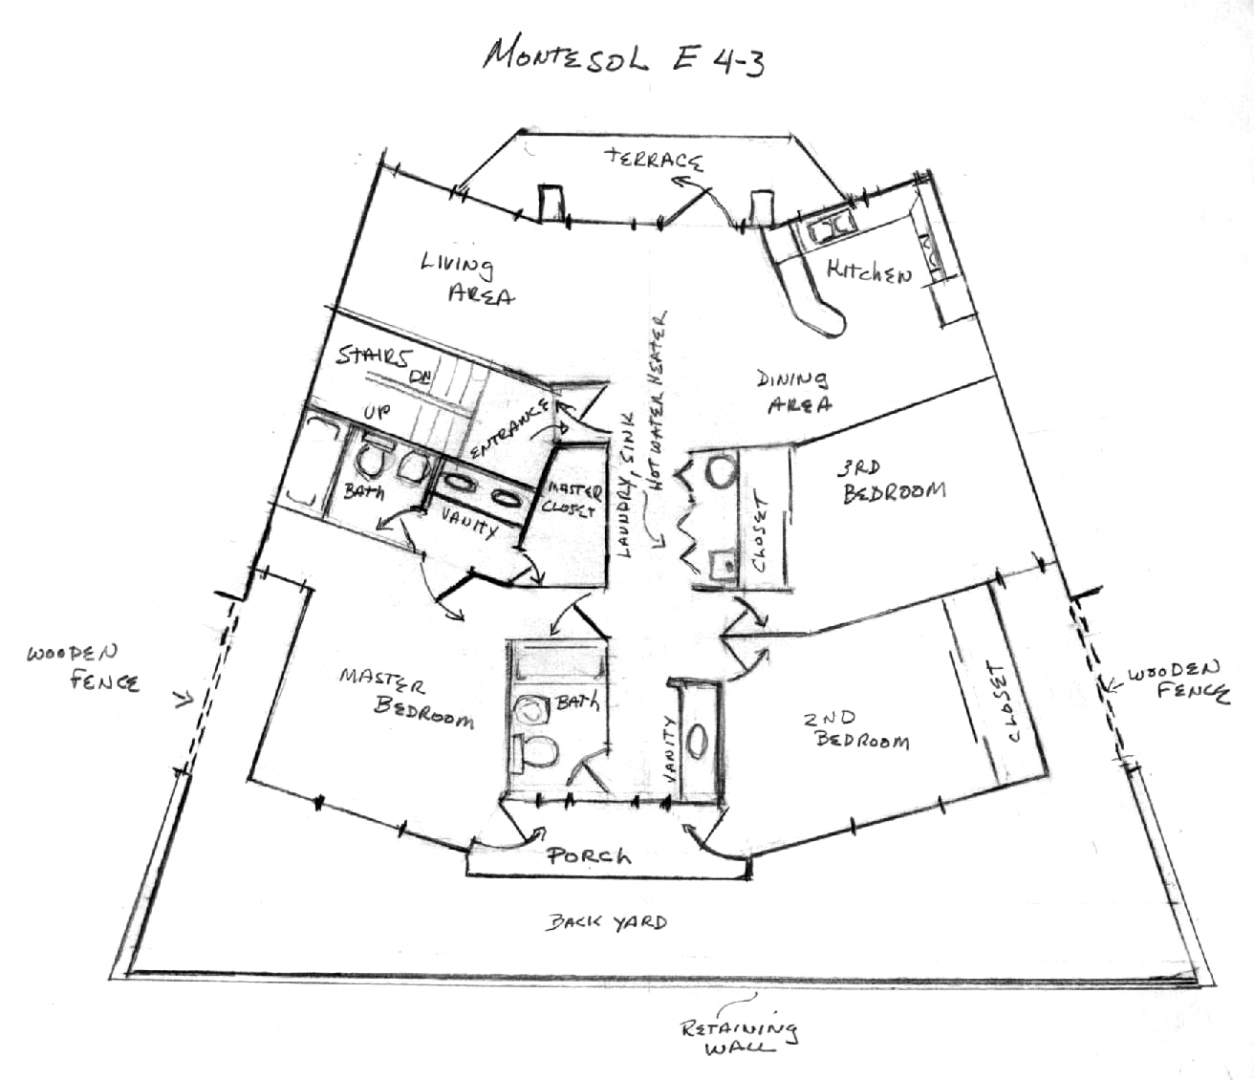 Montesol-E-4-3.jpg